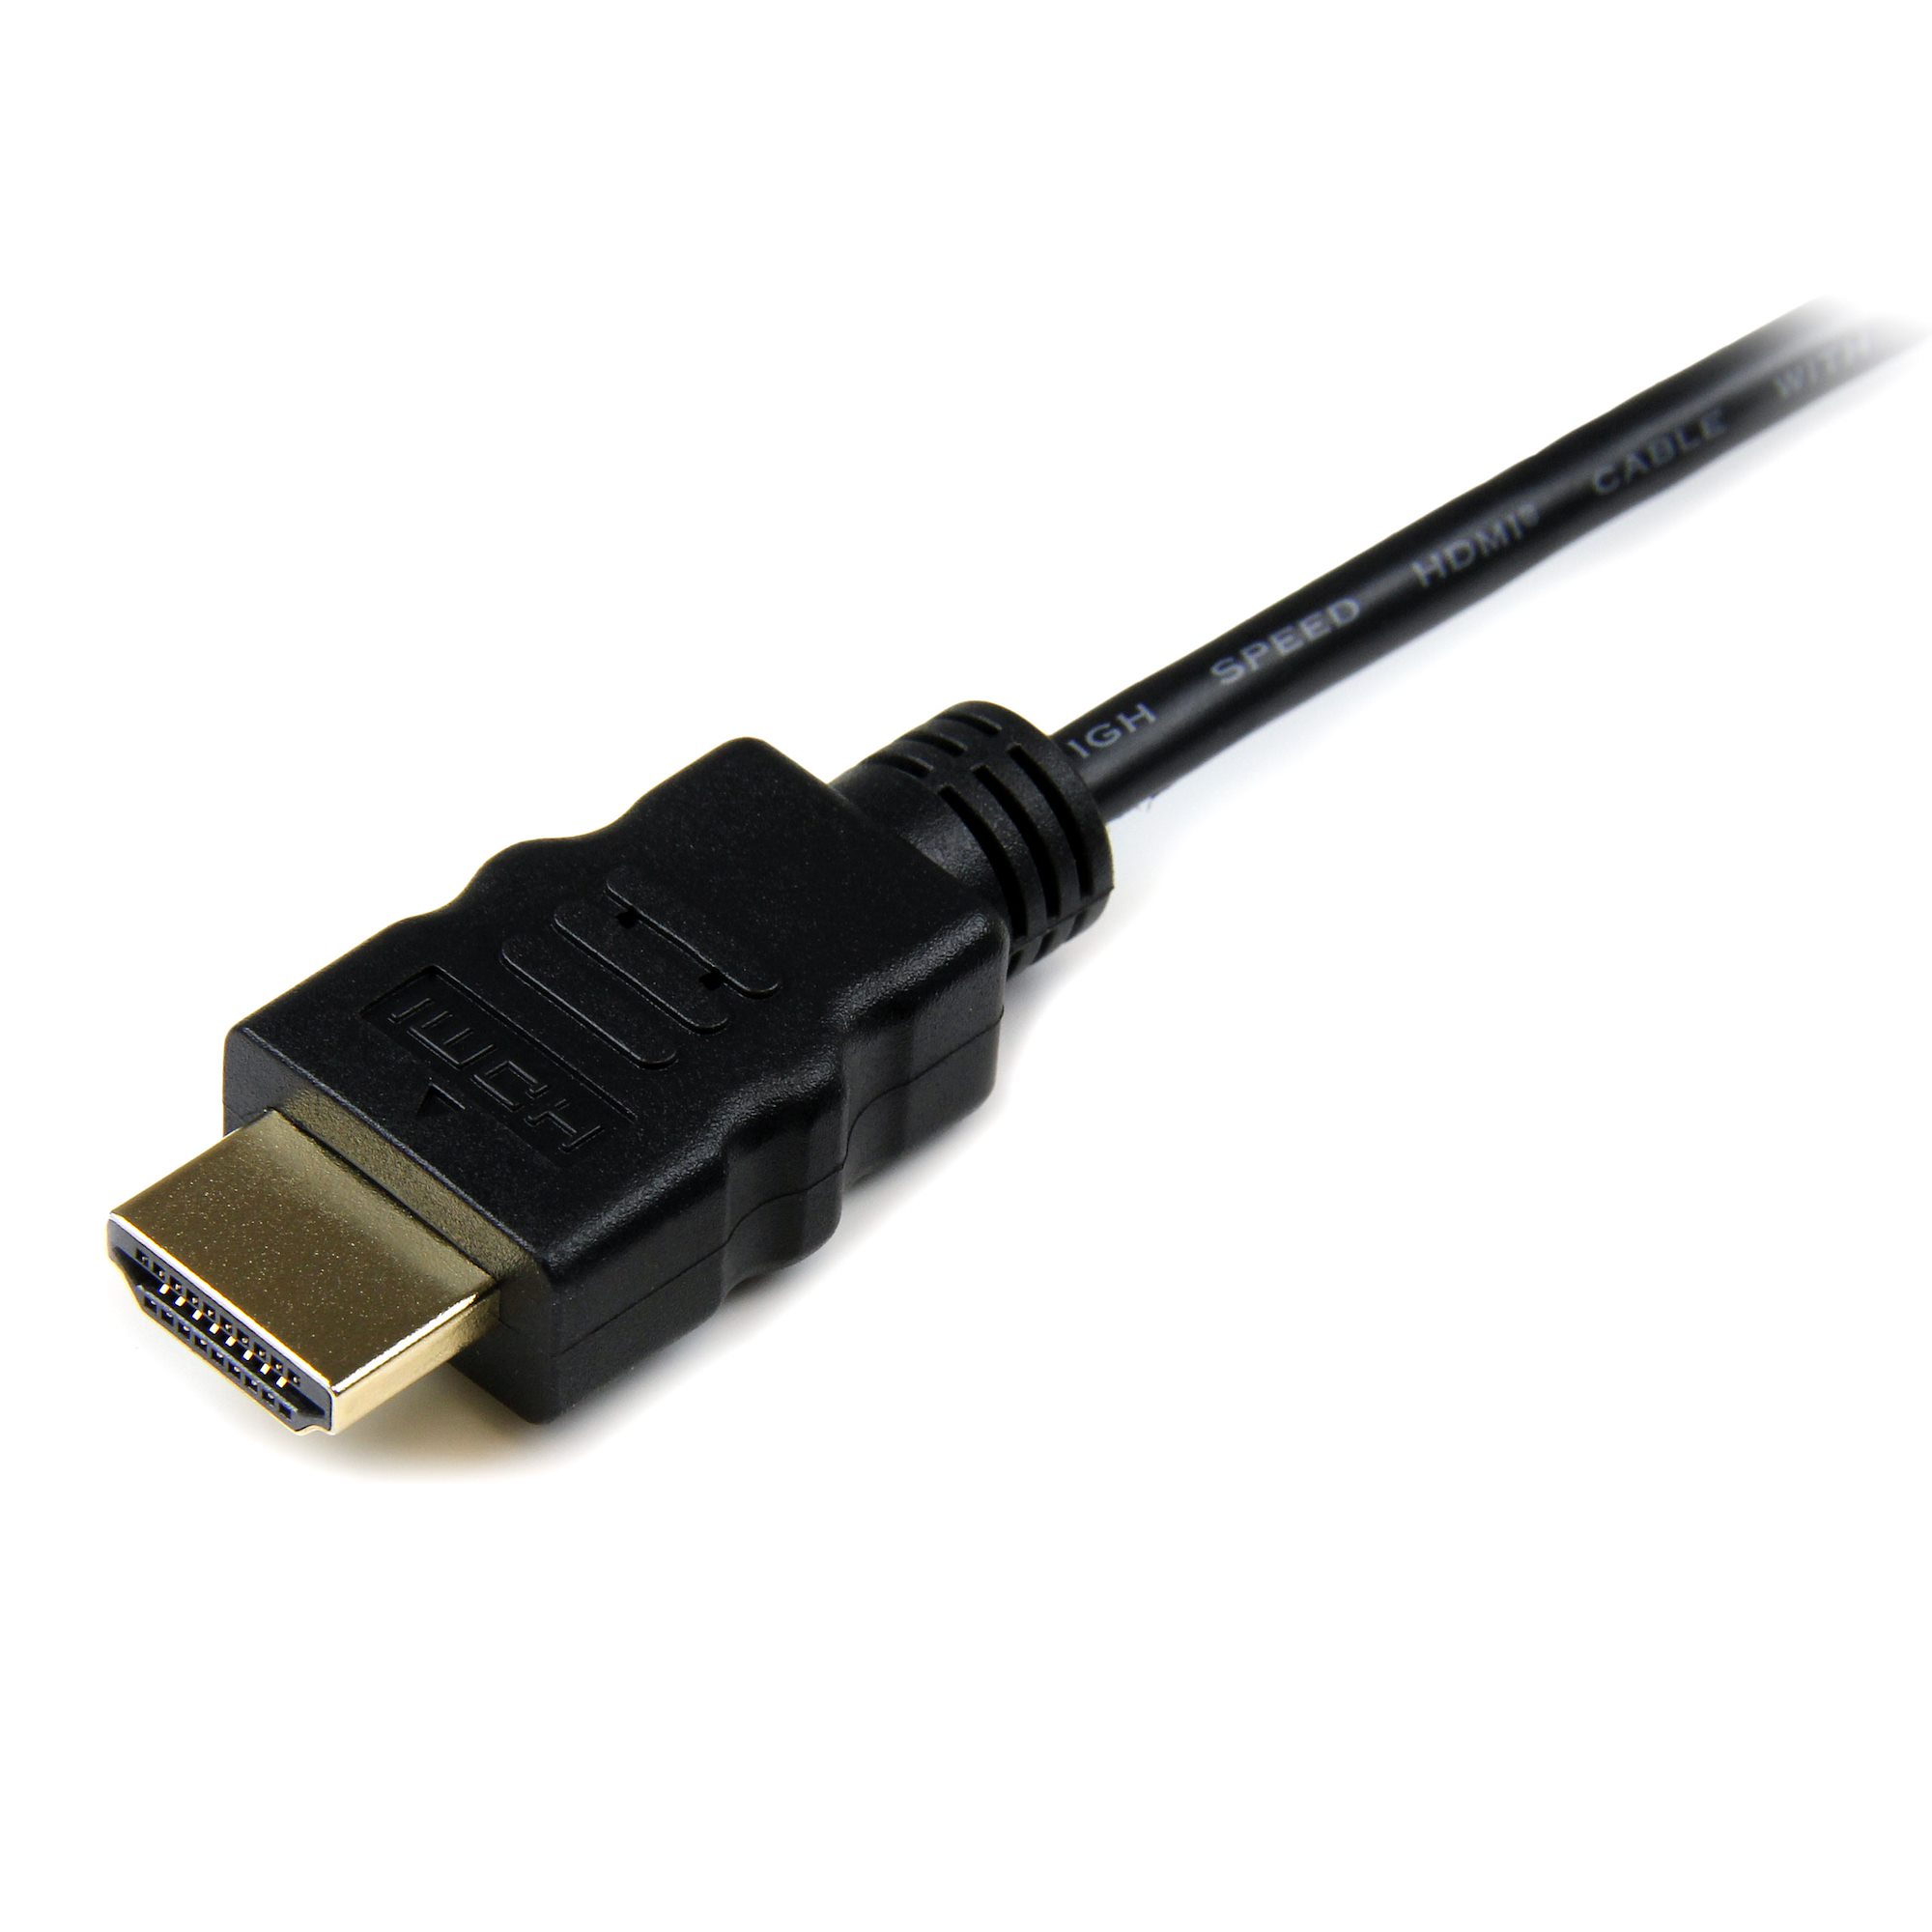 MICROHDMIオス TO HDMIメス 金メッキ 変換ケーブル 延長ケーブル HDMI1.4対応 MICROHDMI(TYPE D) HDMIメス デジカメ、アクションカメラなどにお勧め LP-MC2HDMS